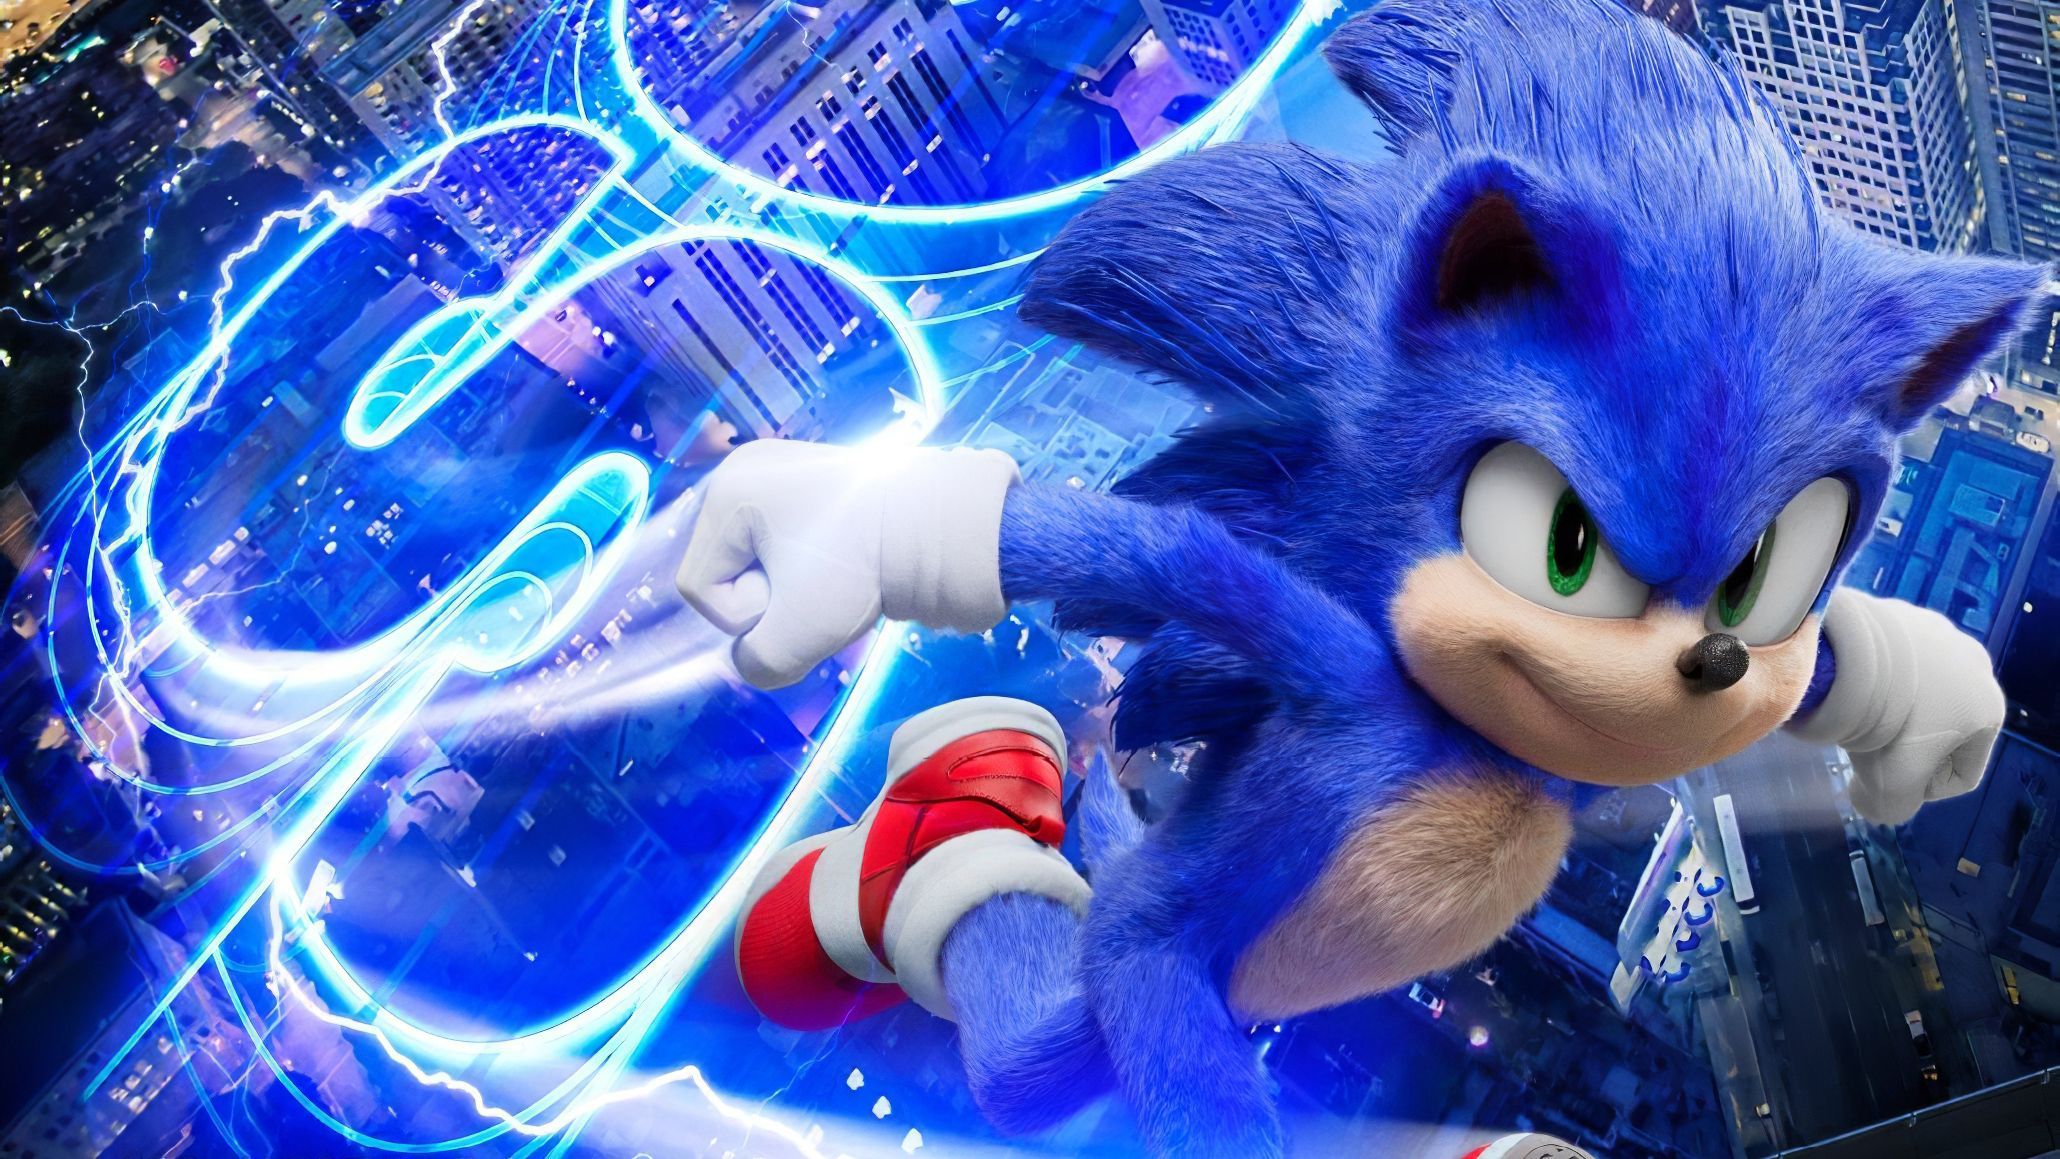 Sonic The Hedgehog 2020 Movie Wallpaper Free Sonic The Hedgehog 2020 Movie Background